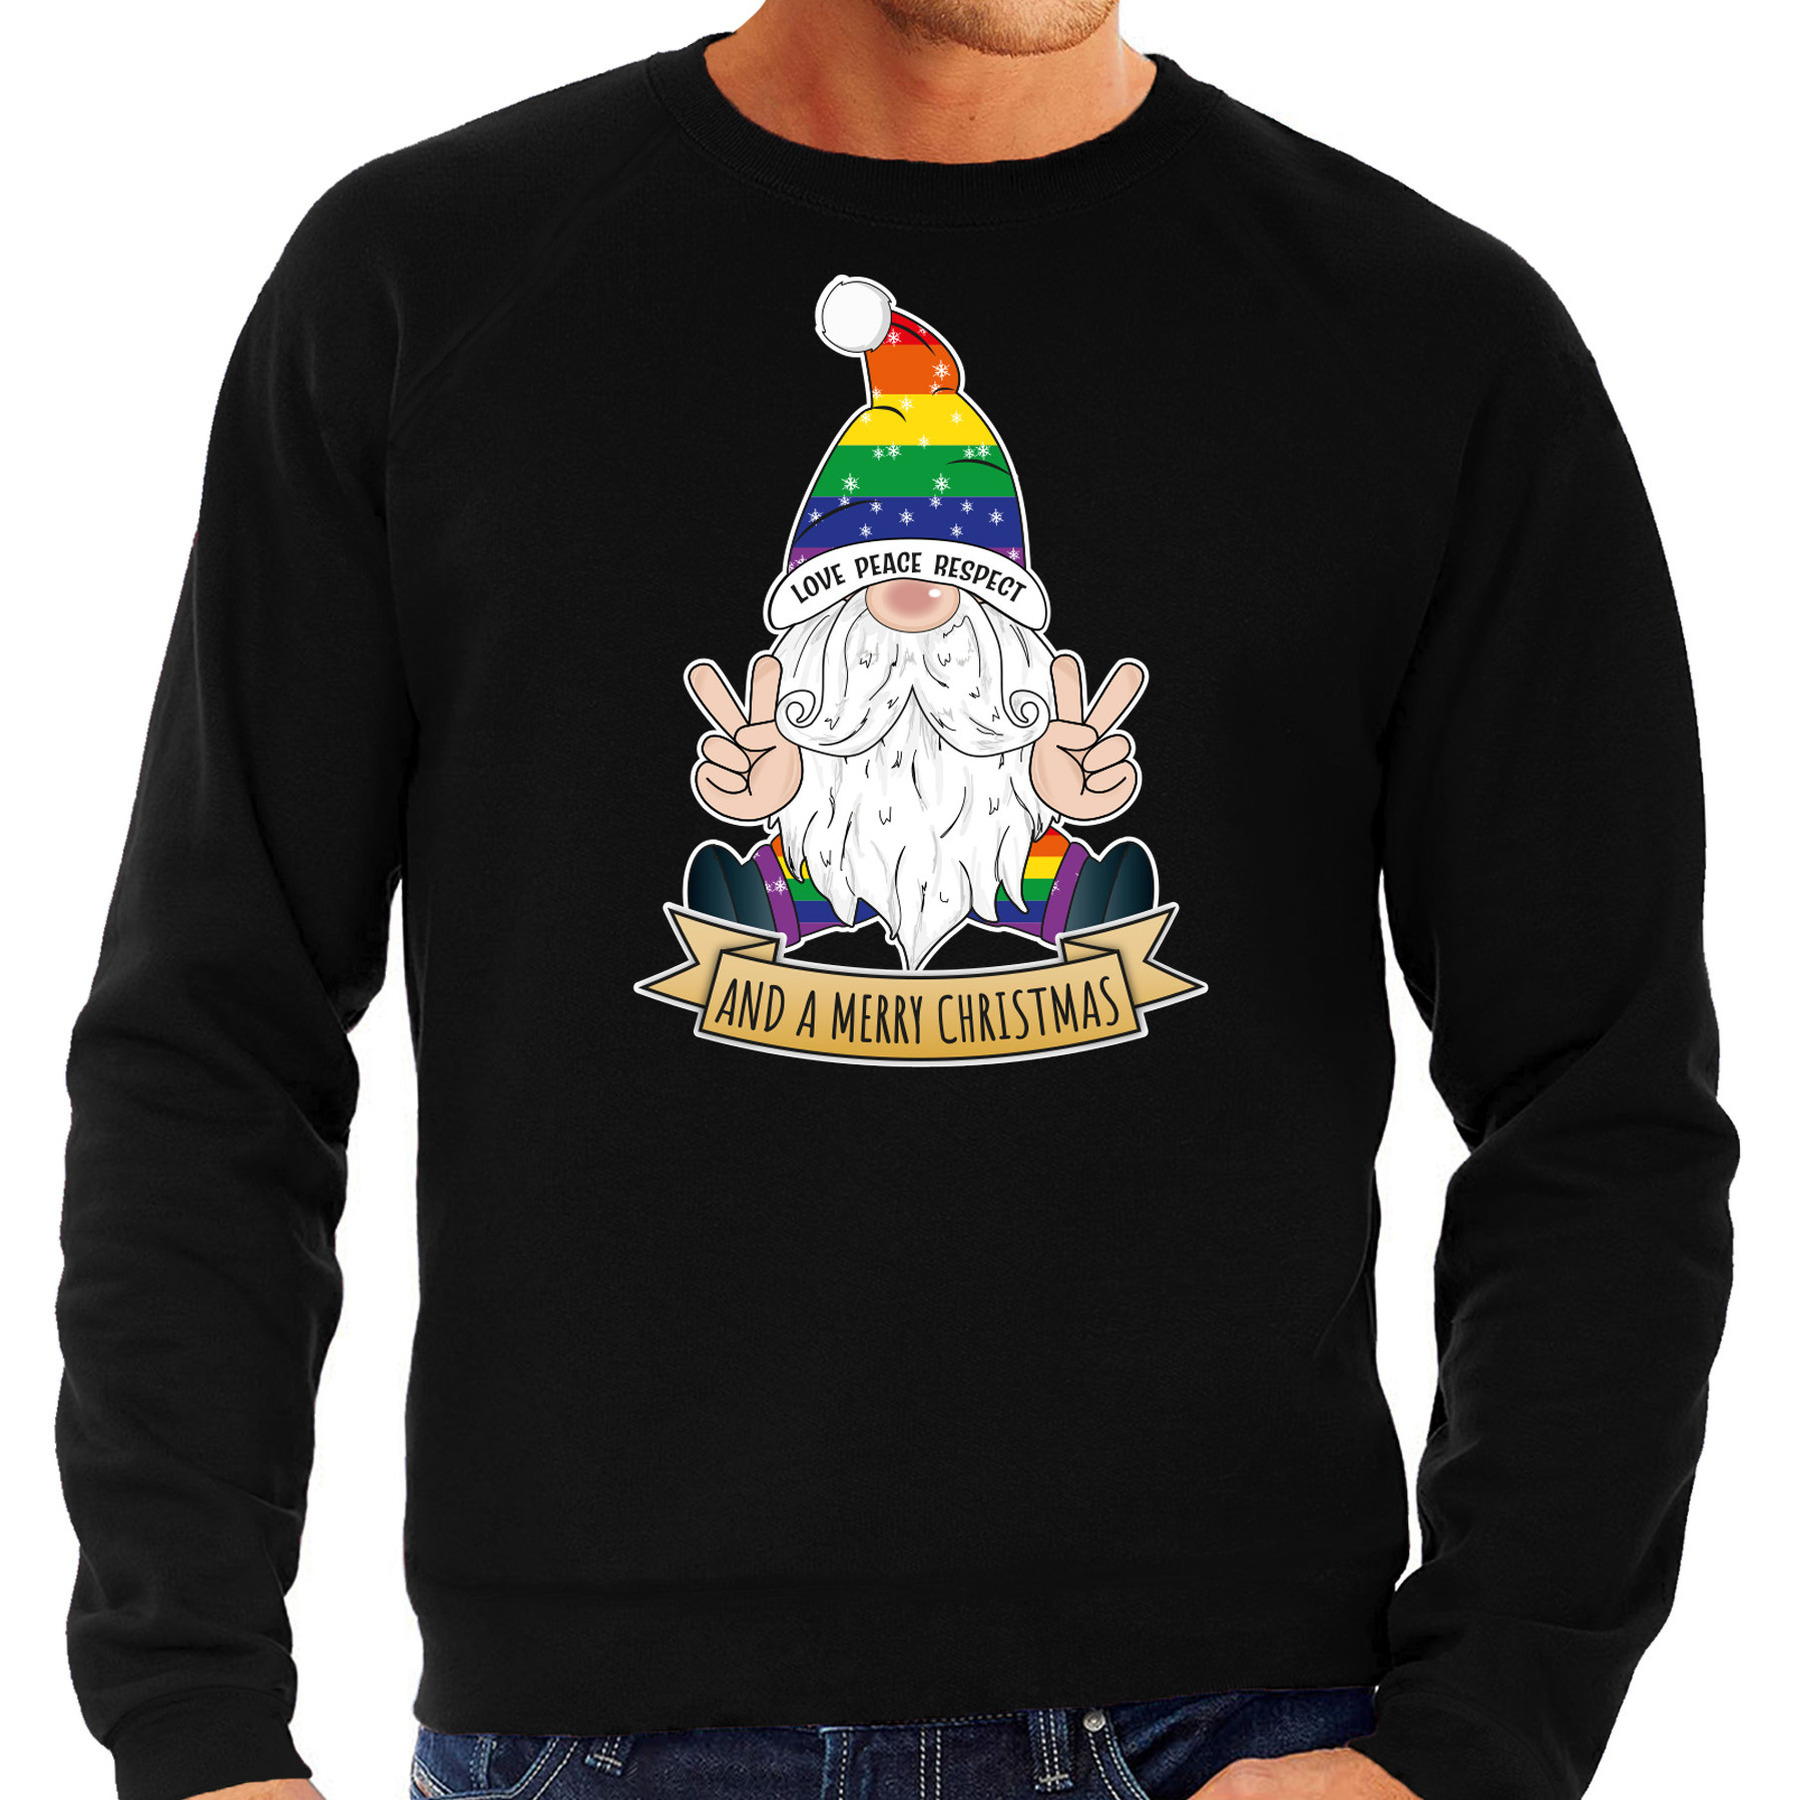 Foute Kersttrui-sweater voor heren Pride Gnoom zwart LHBTI-LGBTQ kabouter